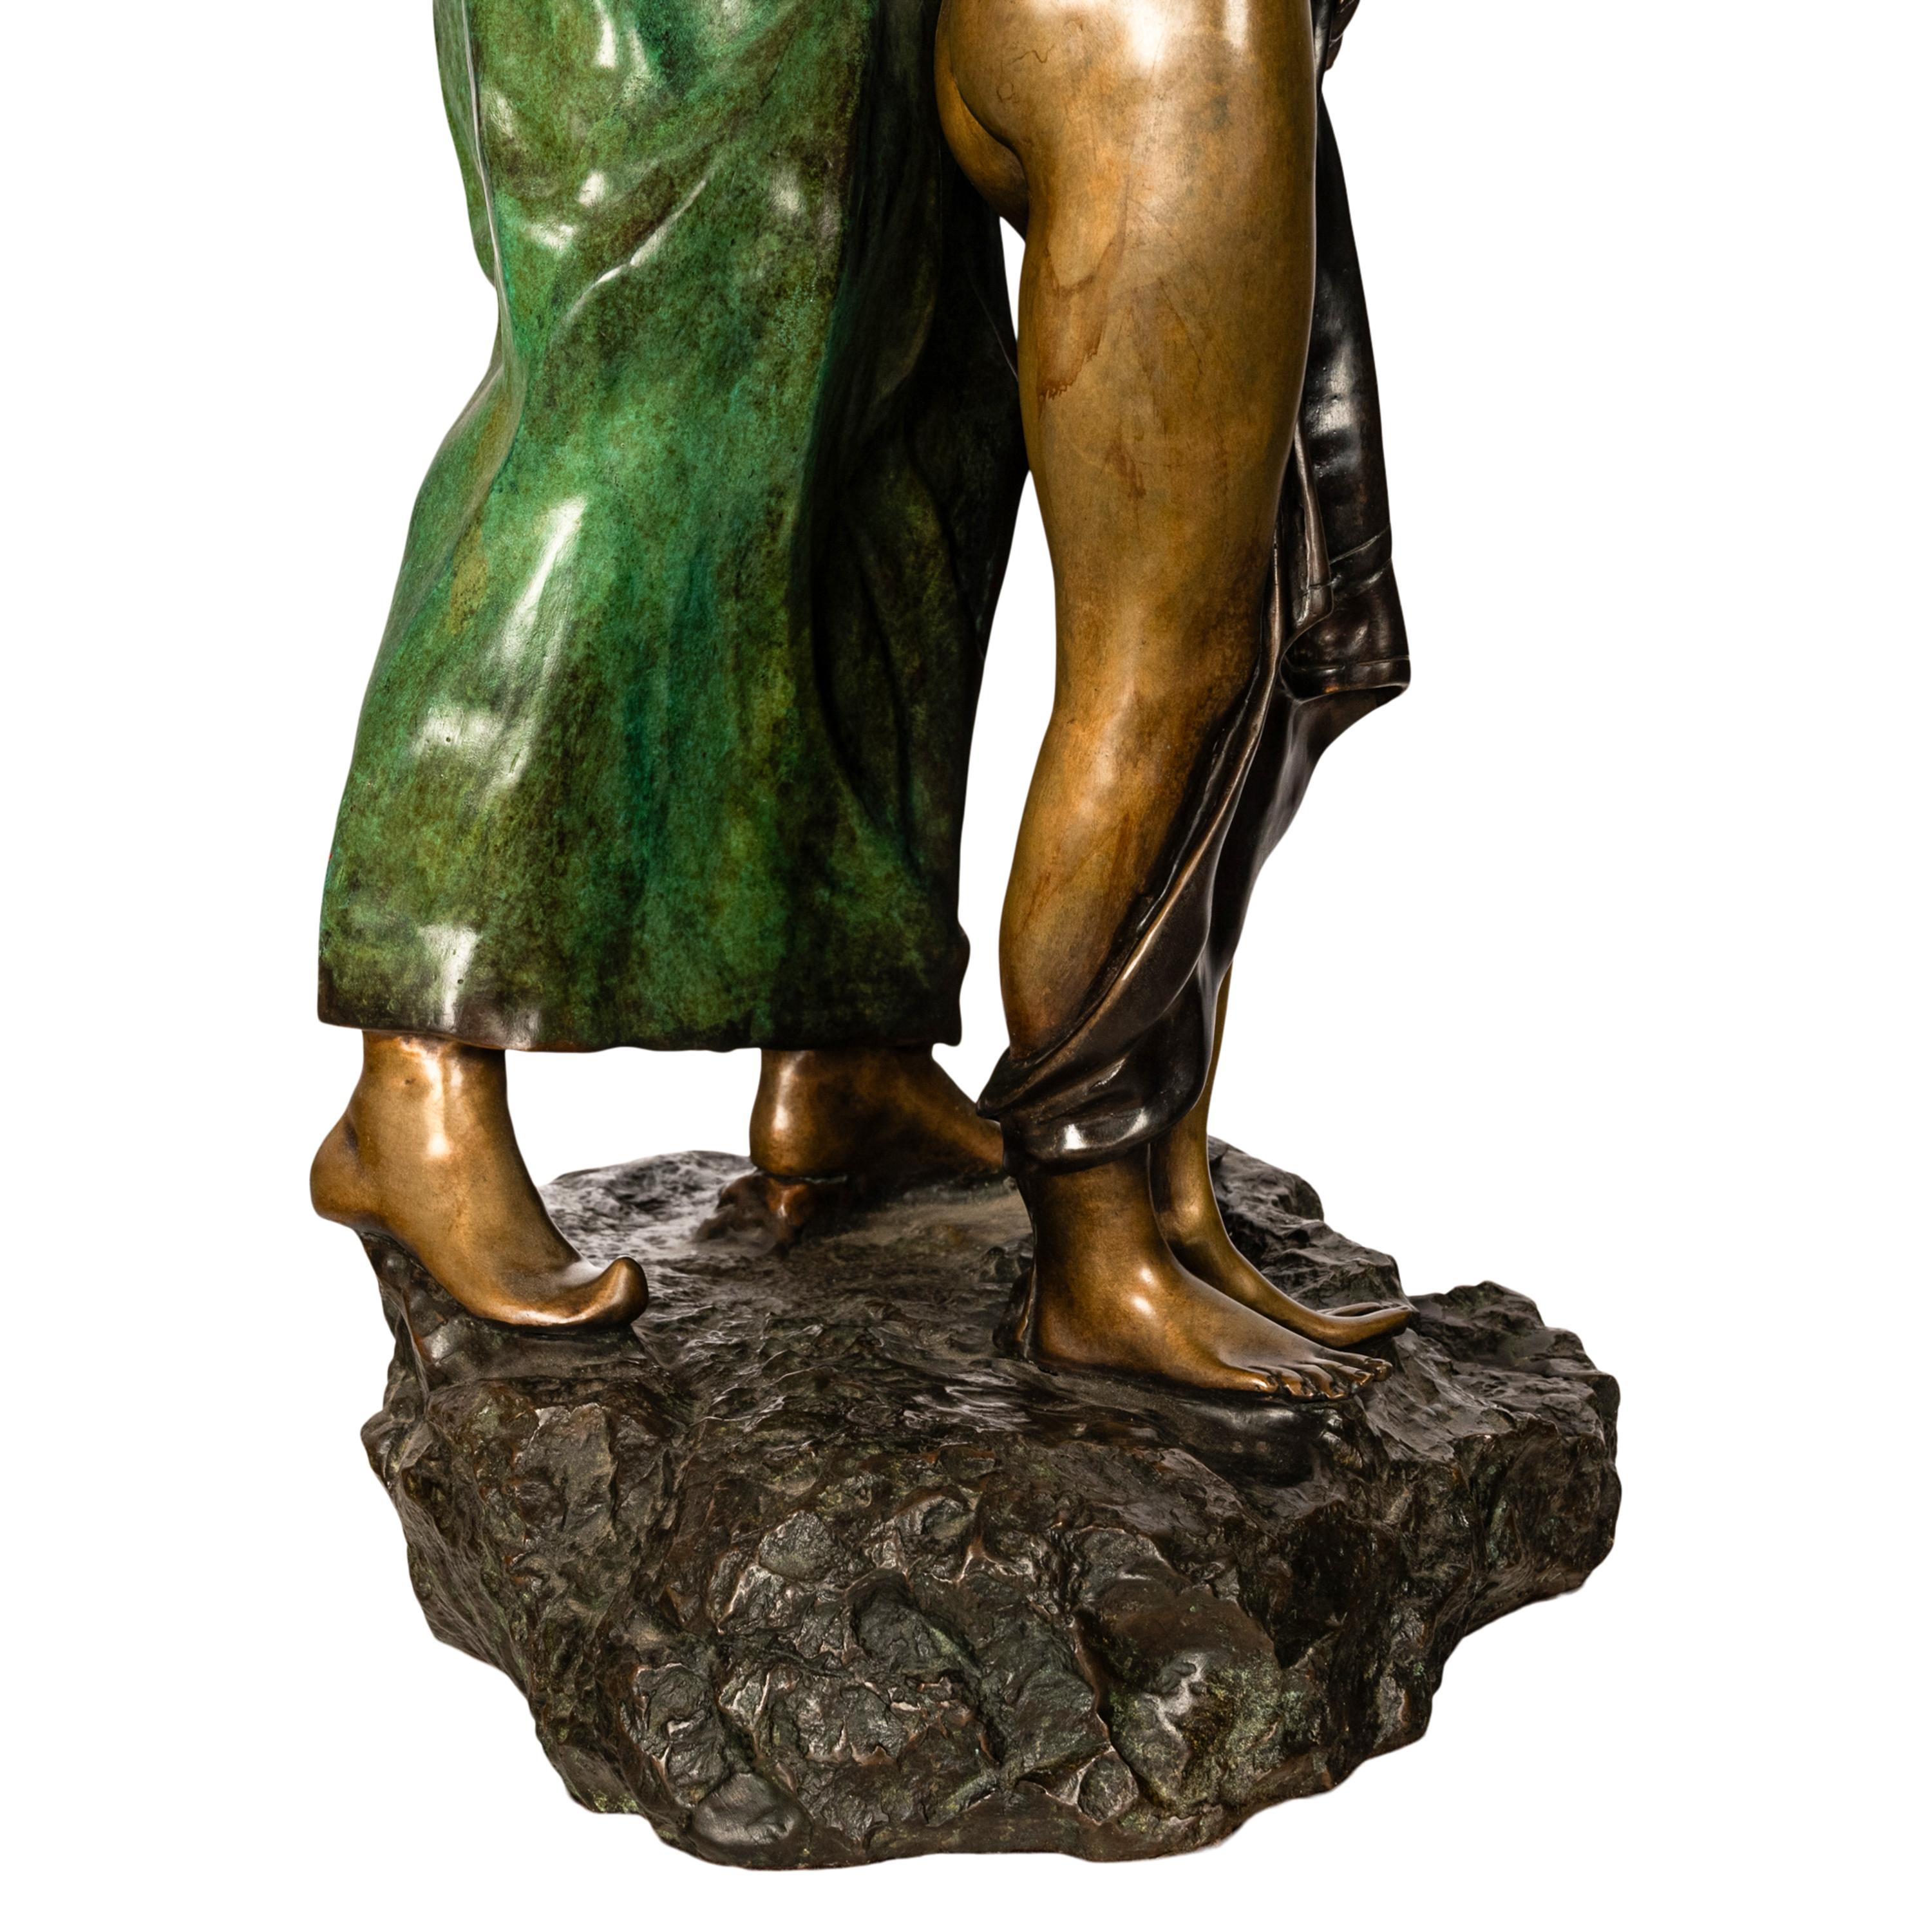 Franz Bergmann Orientalist Arab Slave Nude Group Cold Painted Bronze Signed 1910 For Sale 10